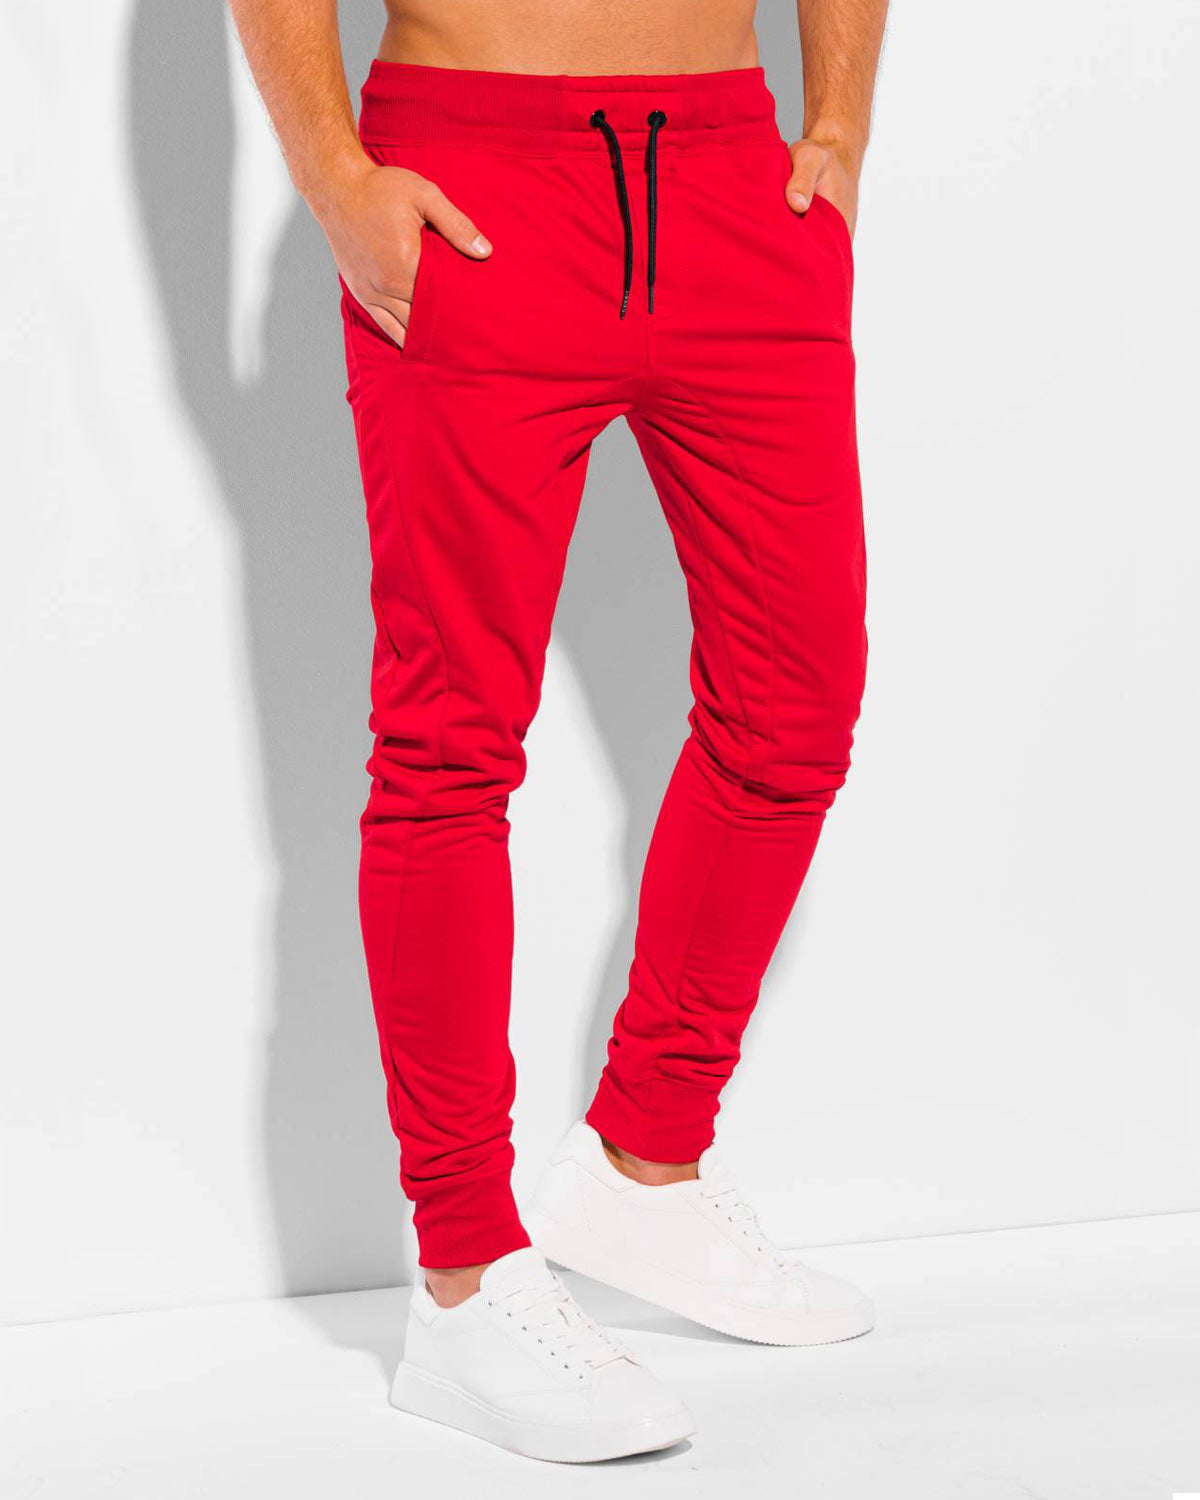 Men's plain red slim-fit fleece sweatpants